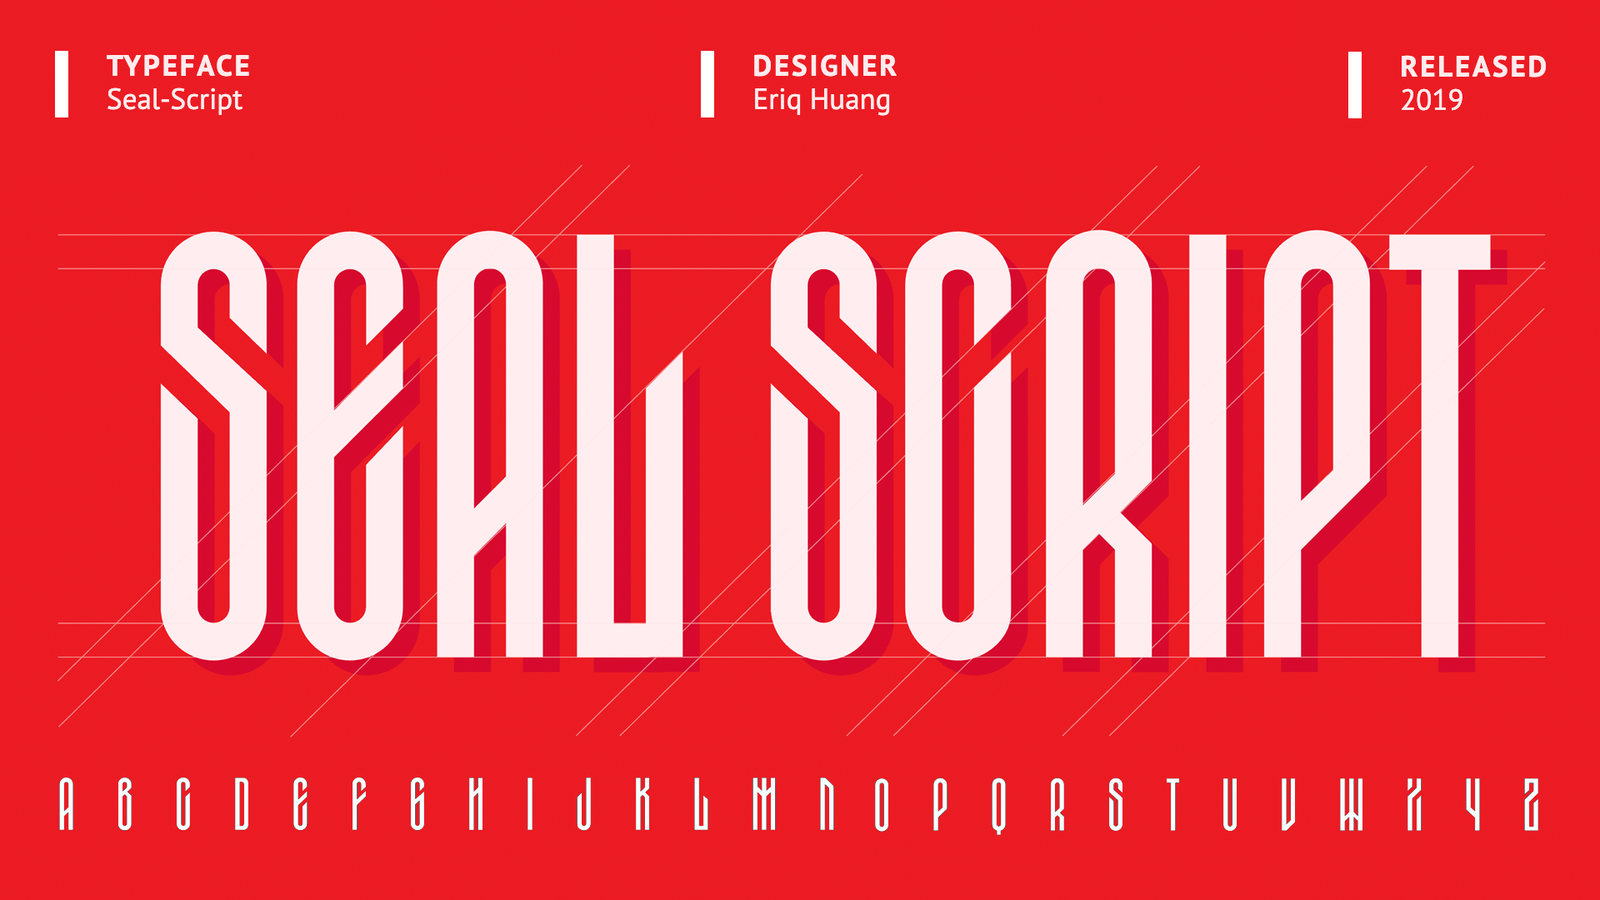 Outstanding Typeface Design 2020